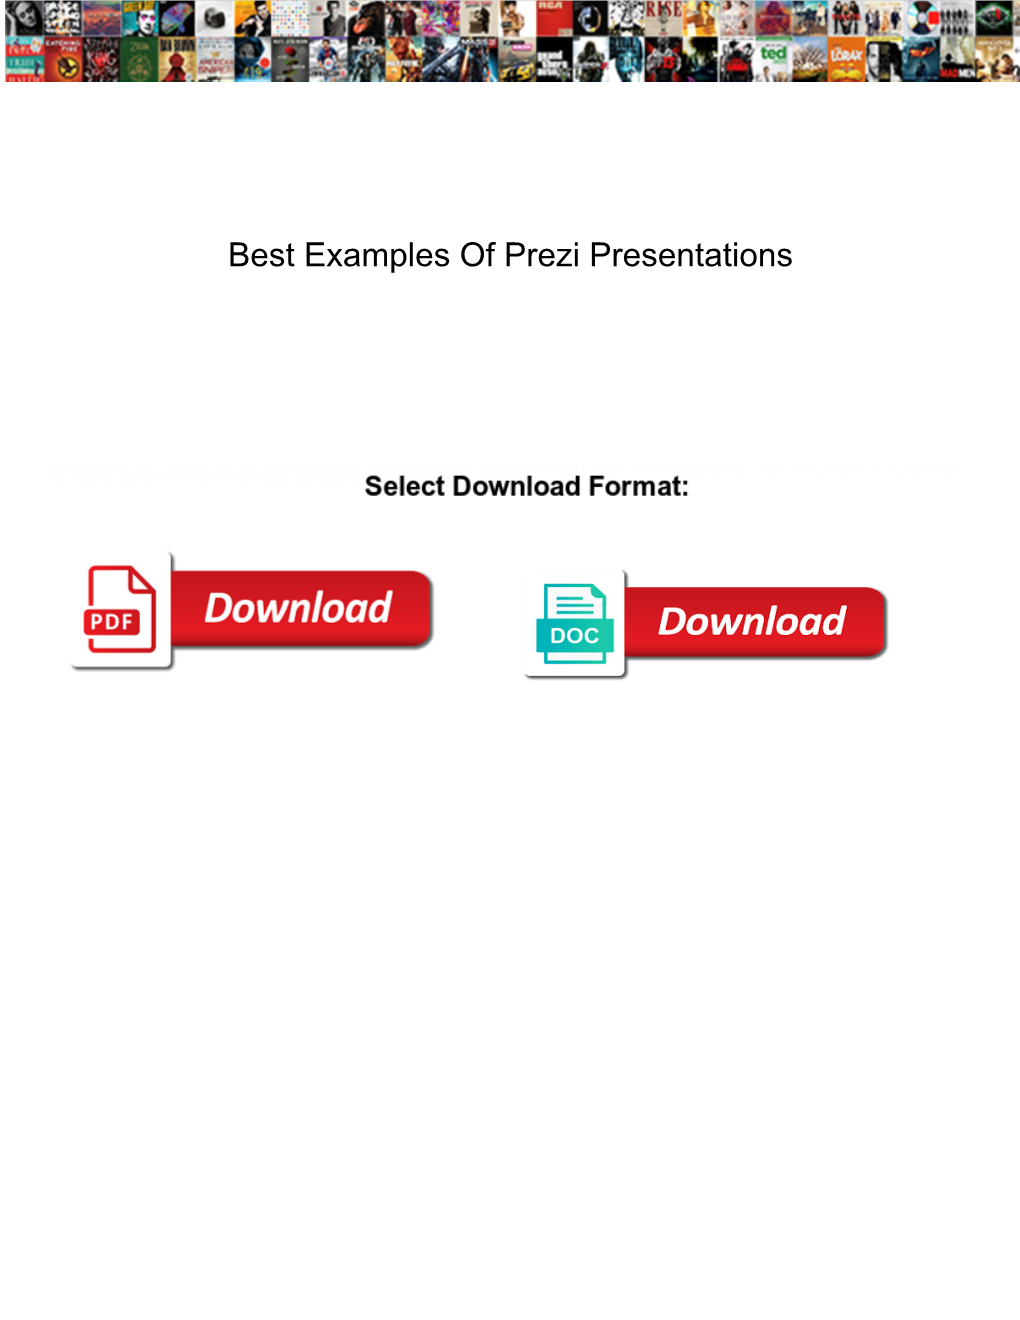 Best Examples of Prezi Presentations